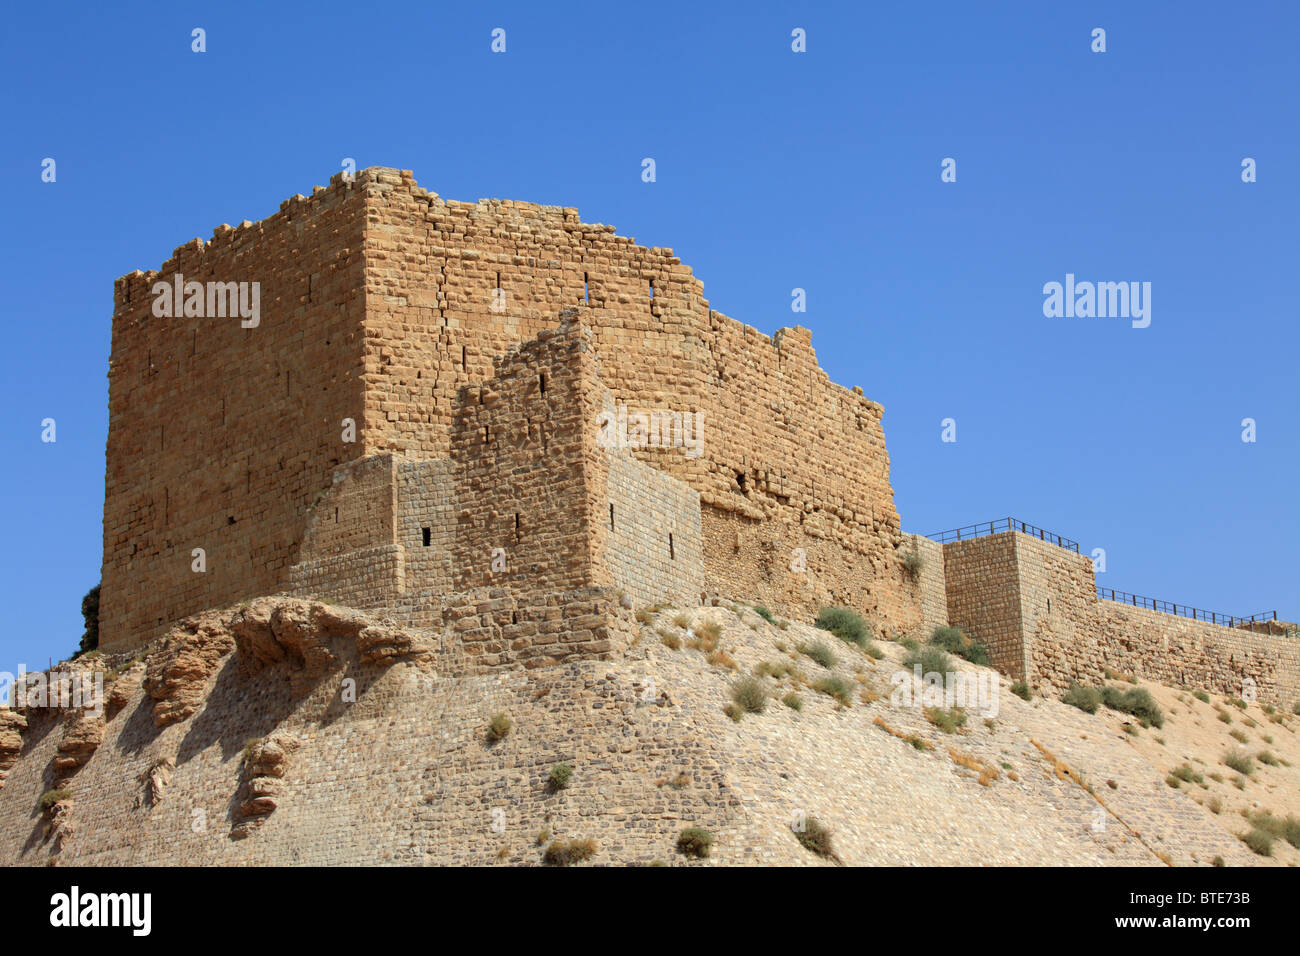 The crusader castle of Kerak, Jordan Stock Photo